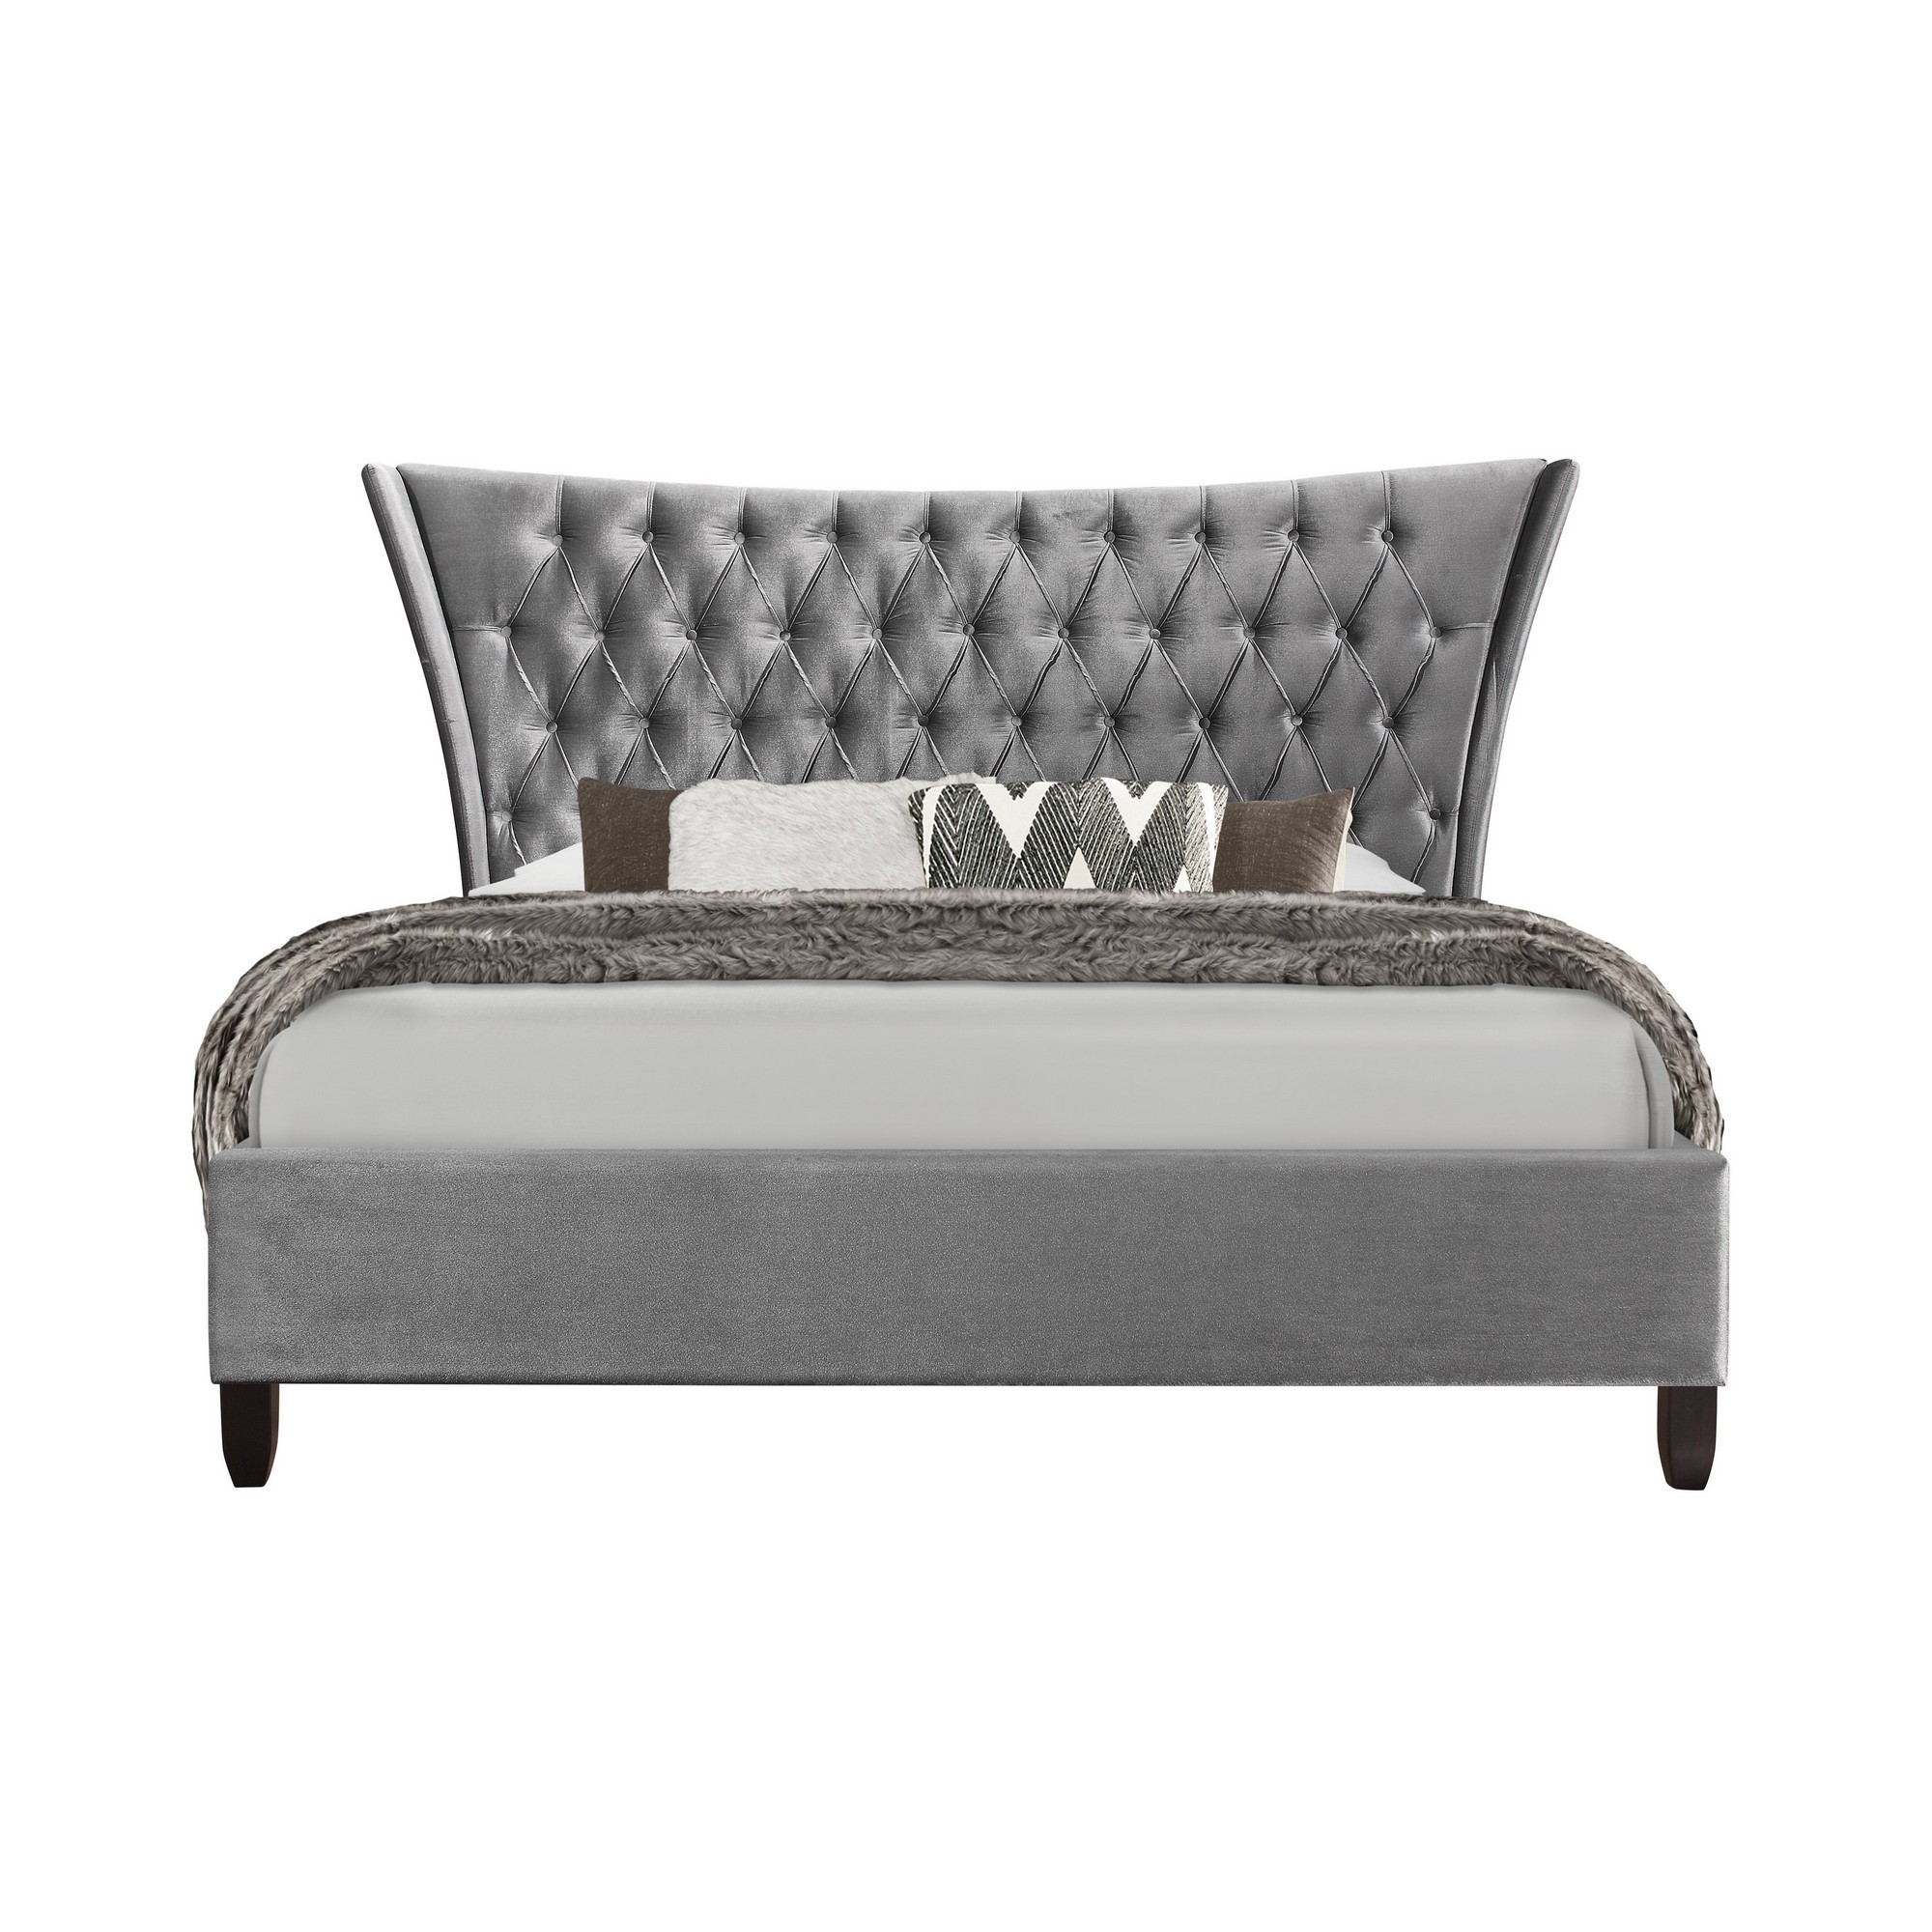 Silver King Bed with Soft Velvet Grey Upholstered Headboard